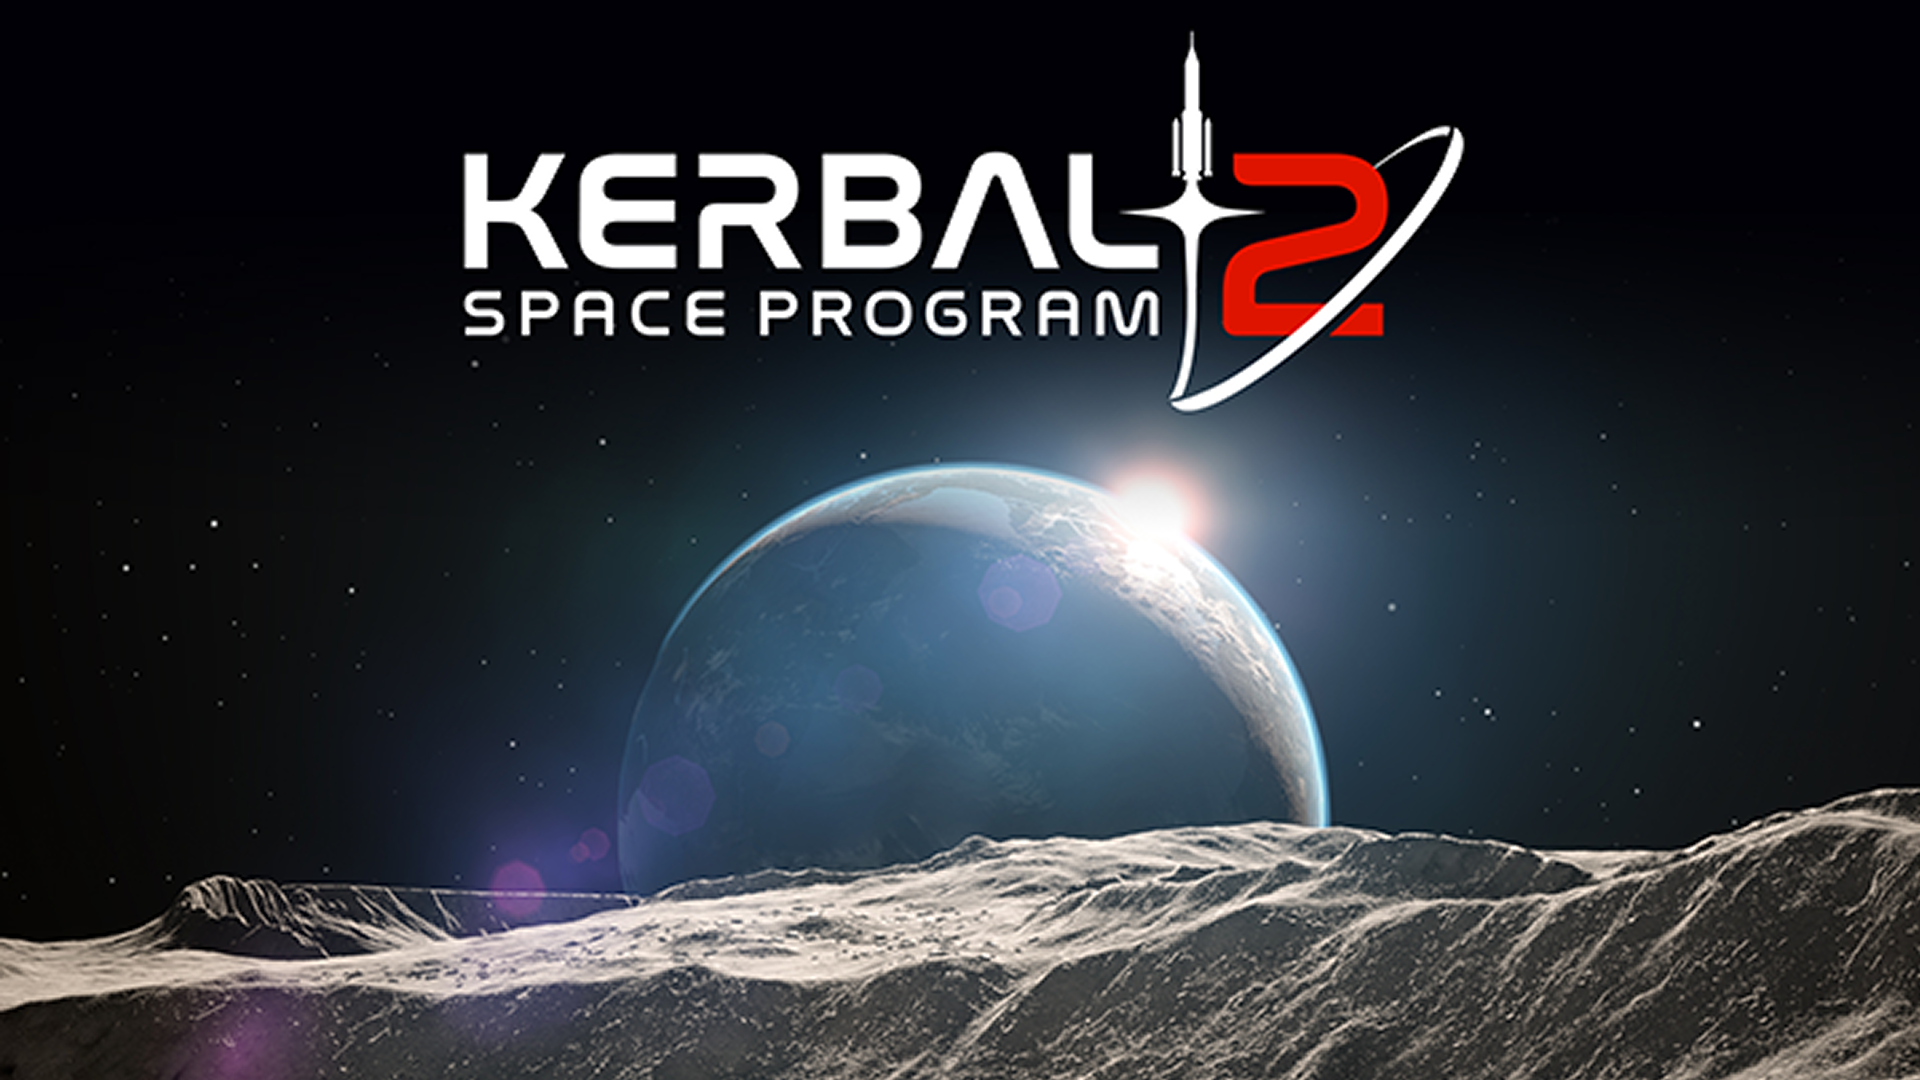 [CP] Kerbal Space Program Celebrates Its 10th Anniversary

